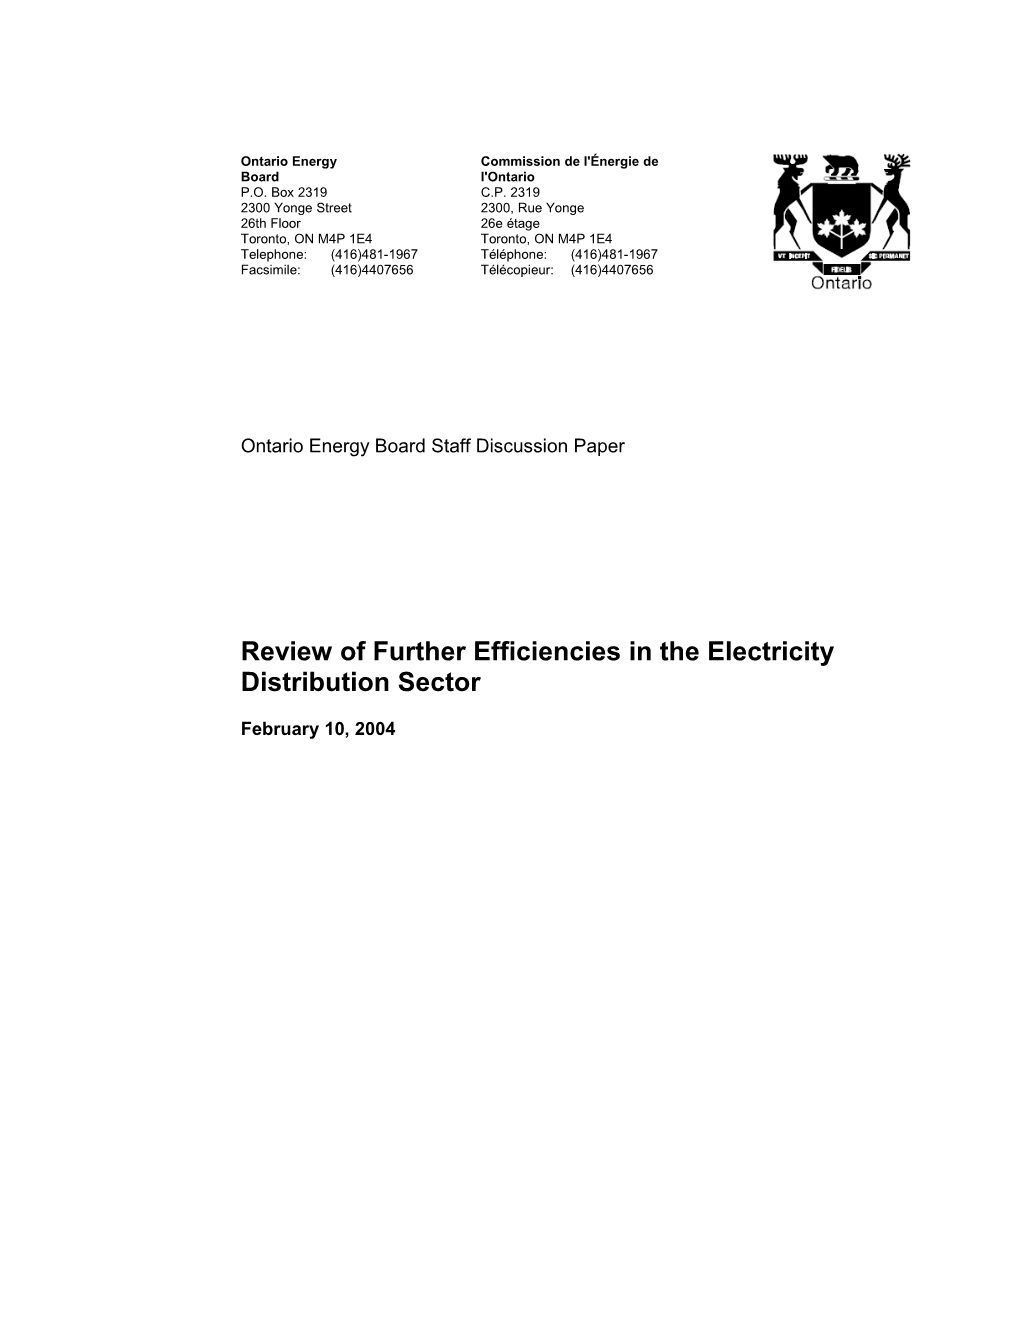 Electricity Distribution Efficiencies - Discussion Paper